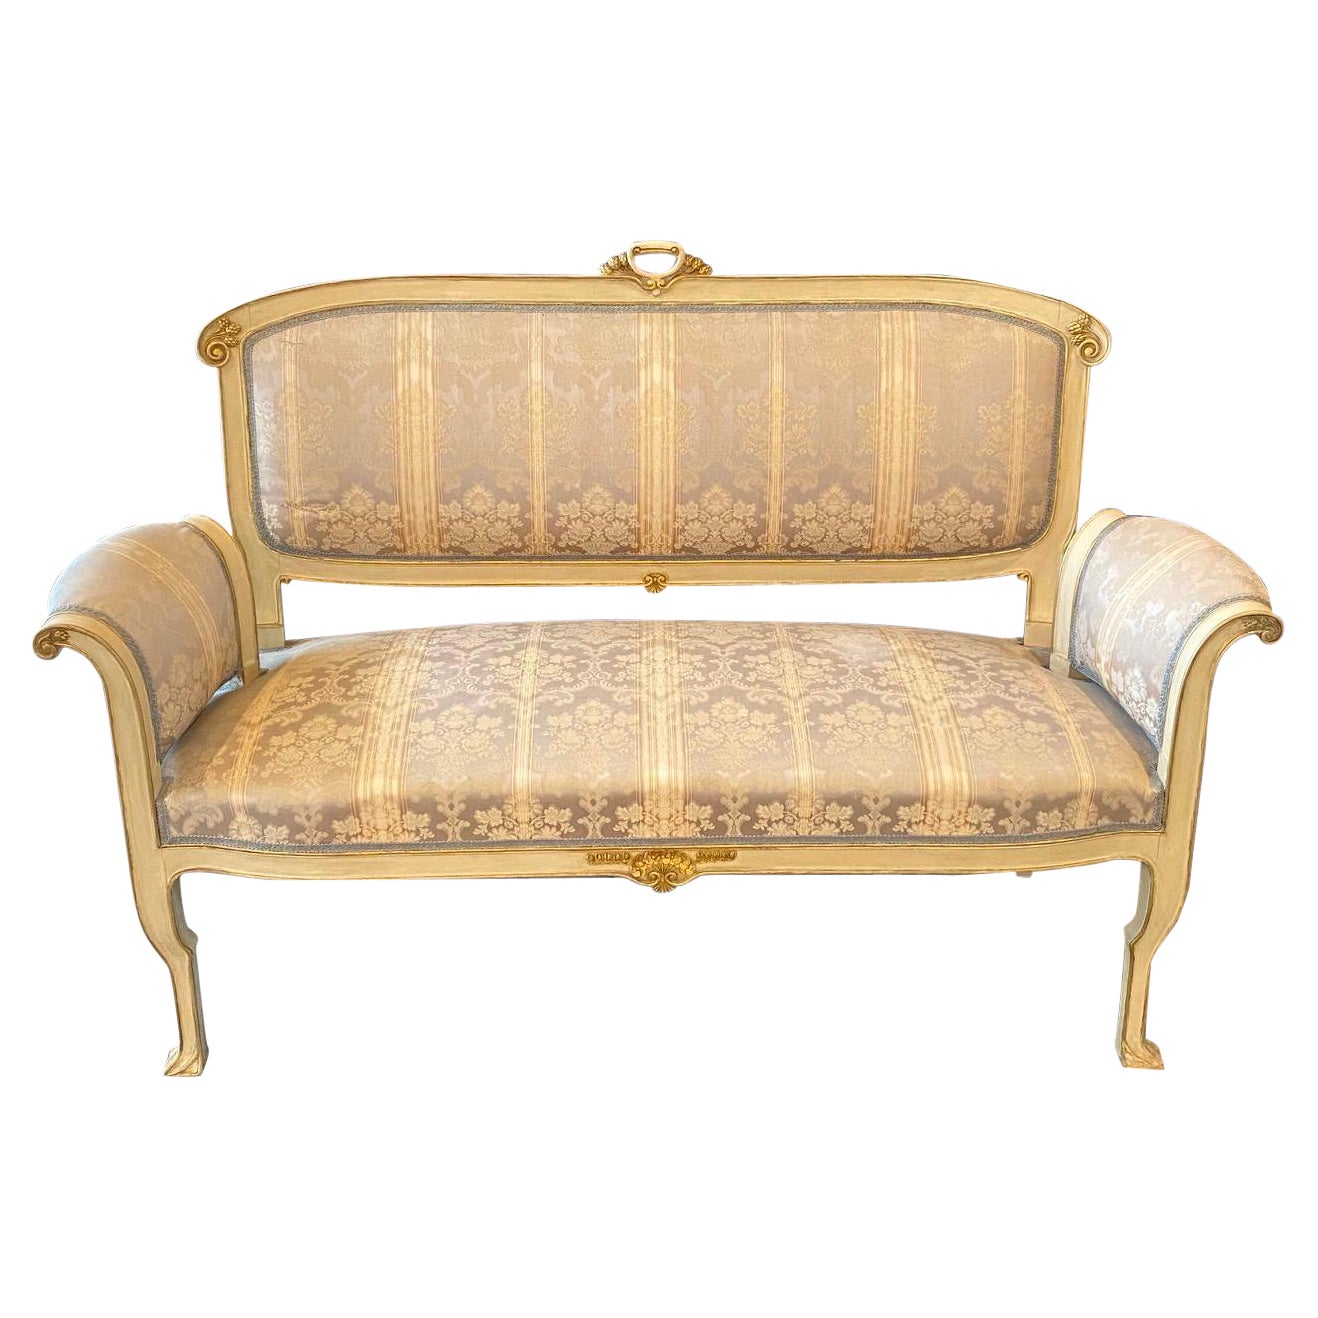 Elegant Art Nouveau Italian Antique Upholstered Sofa For Sale